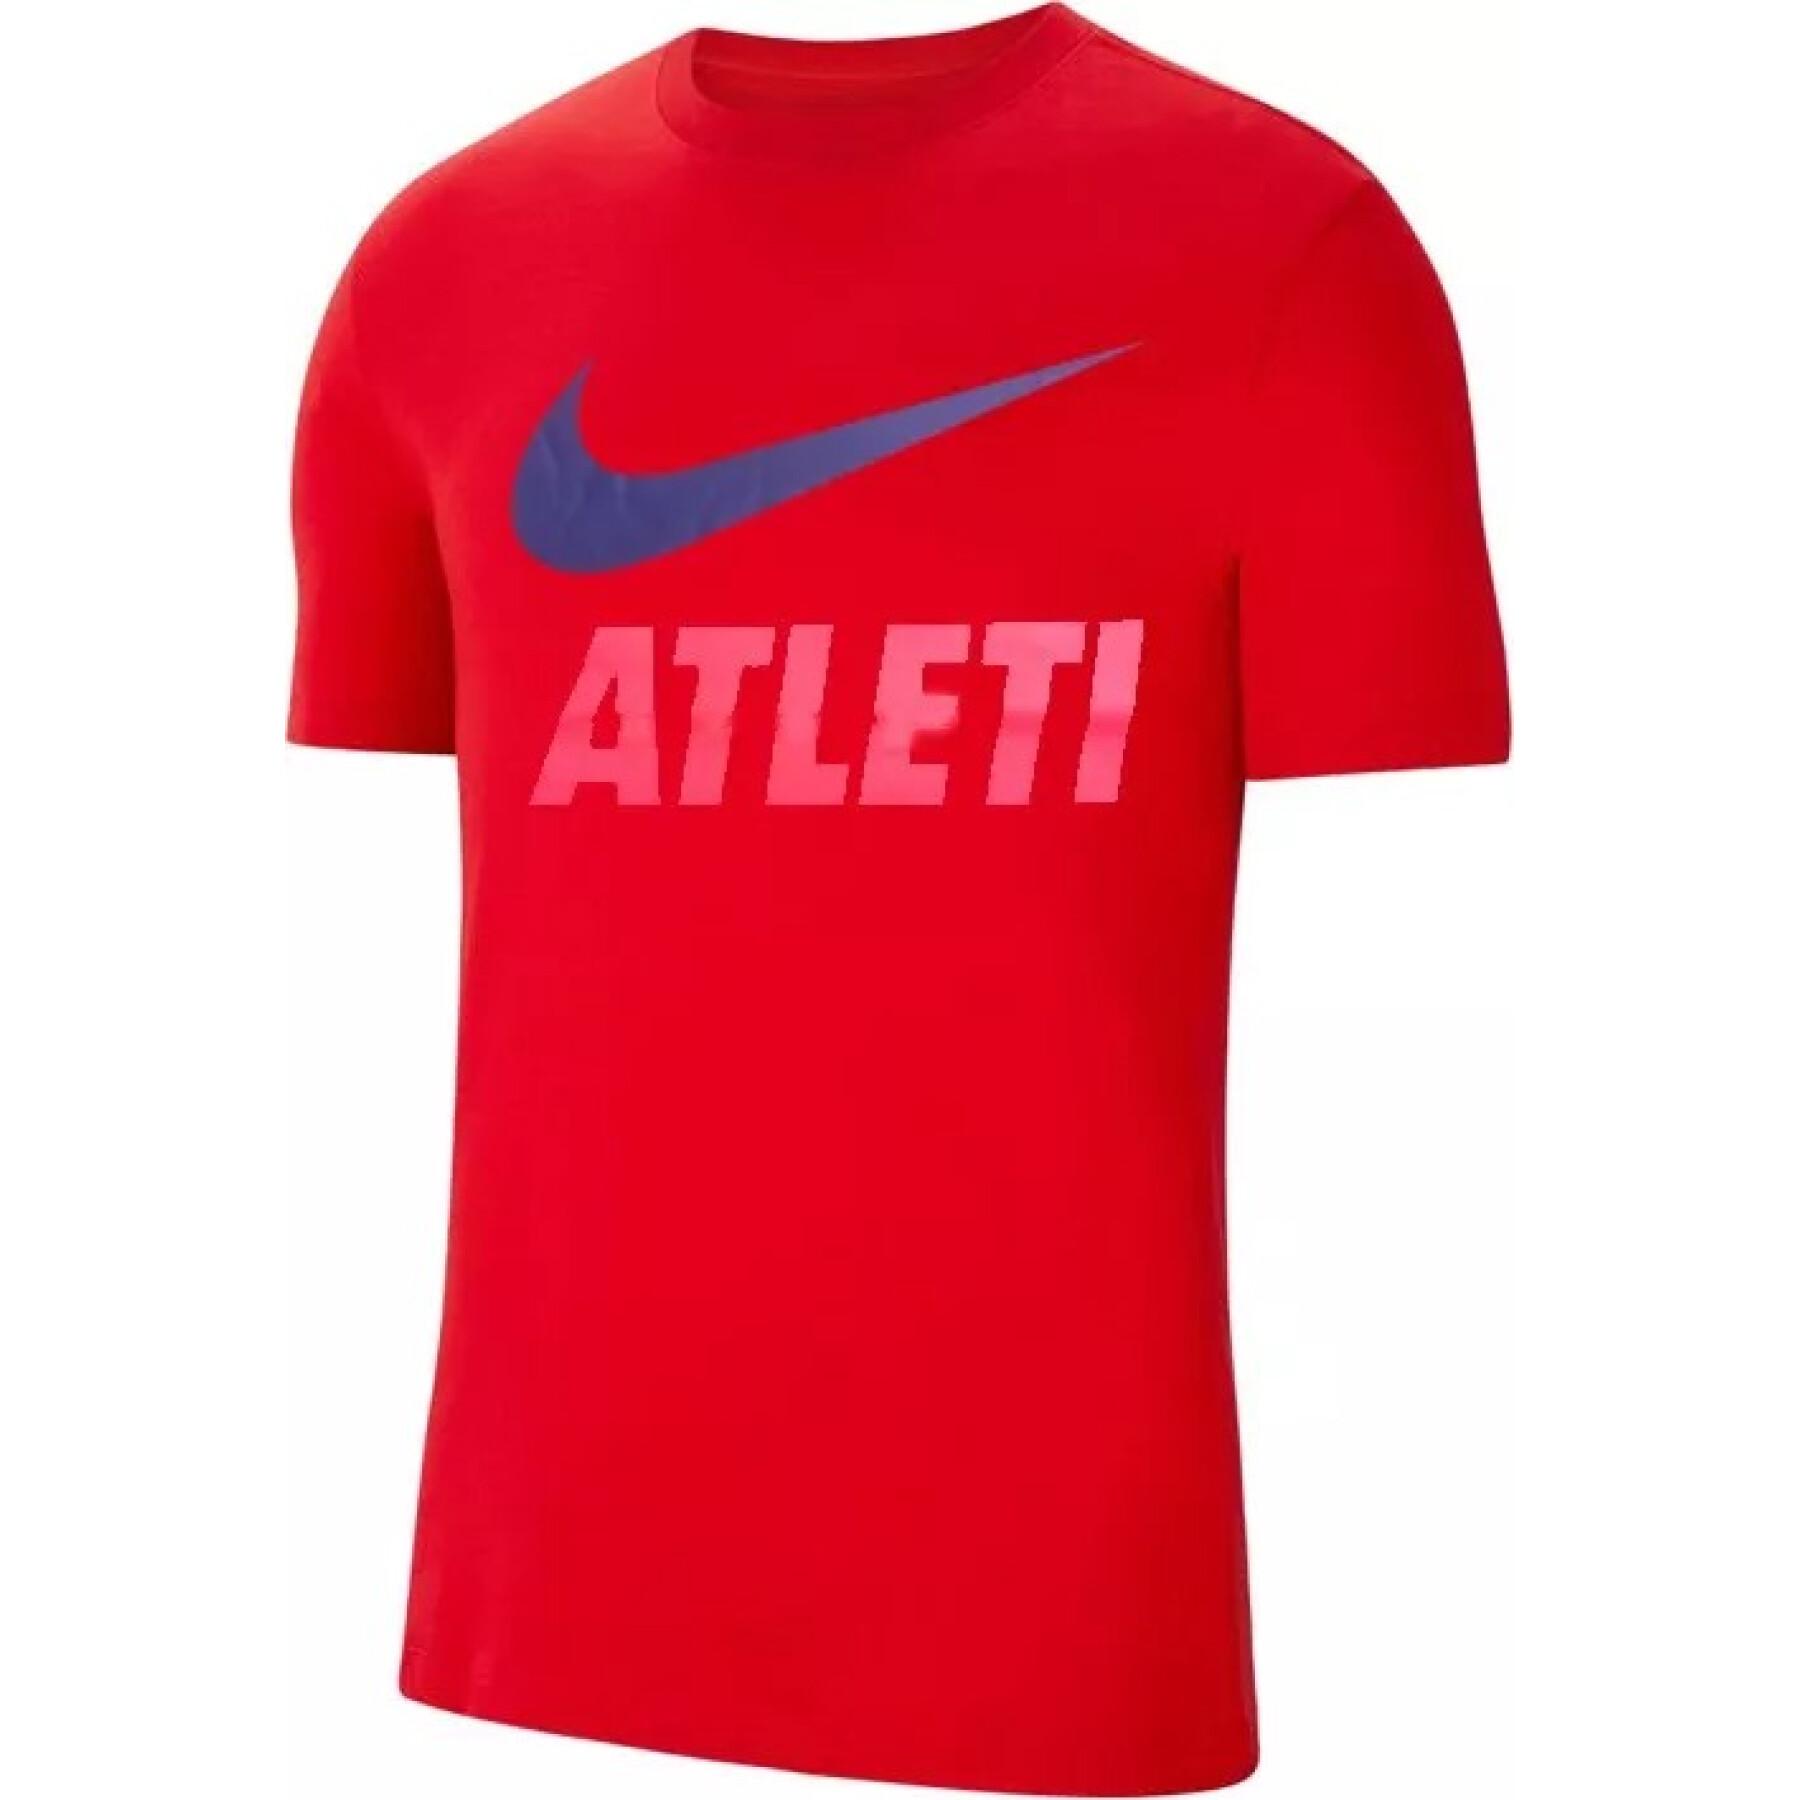 Atlético de madrid swoosh club t-shirt 2021/22